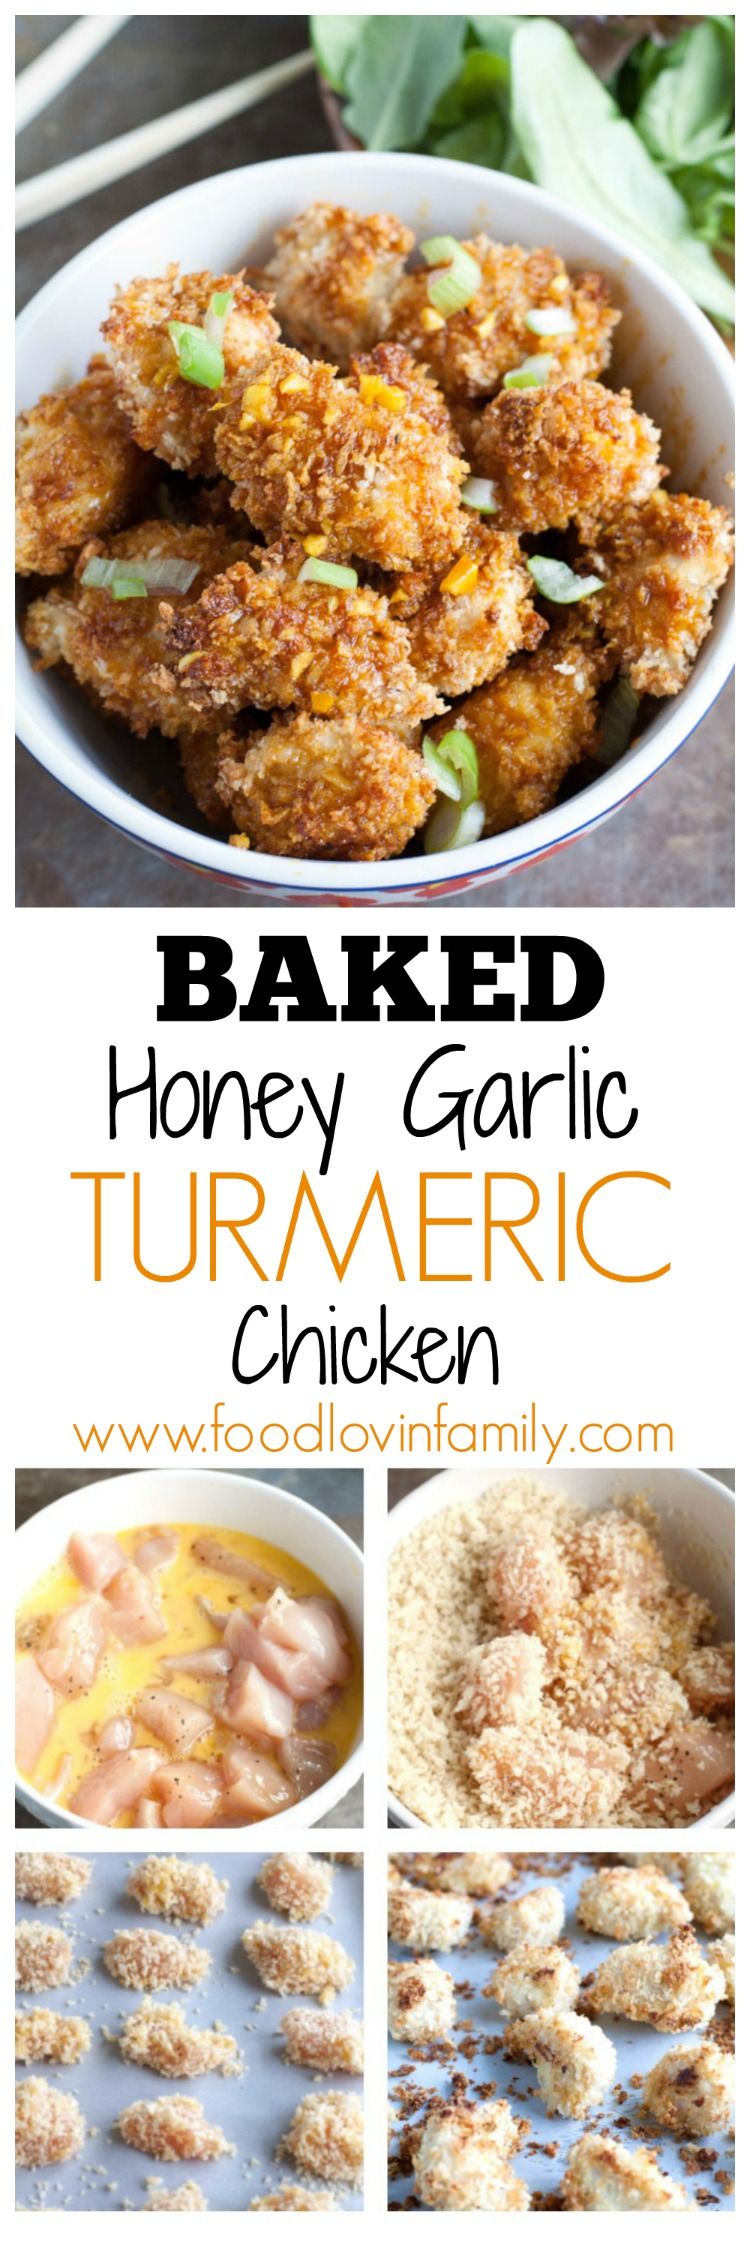 Baked honey garlic turmeric chicken packs a lot of flavor into crispy chicken bites.